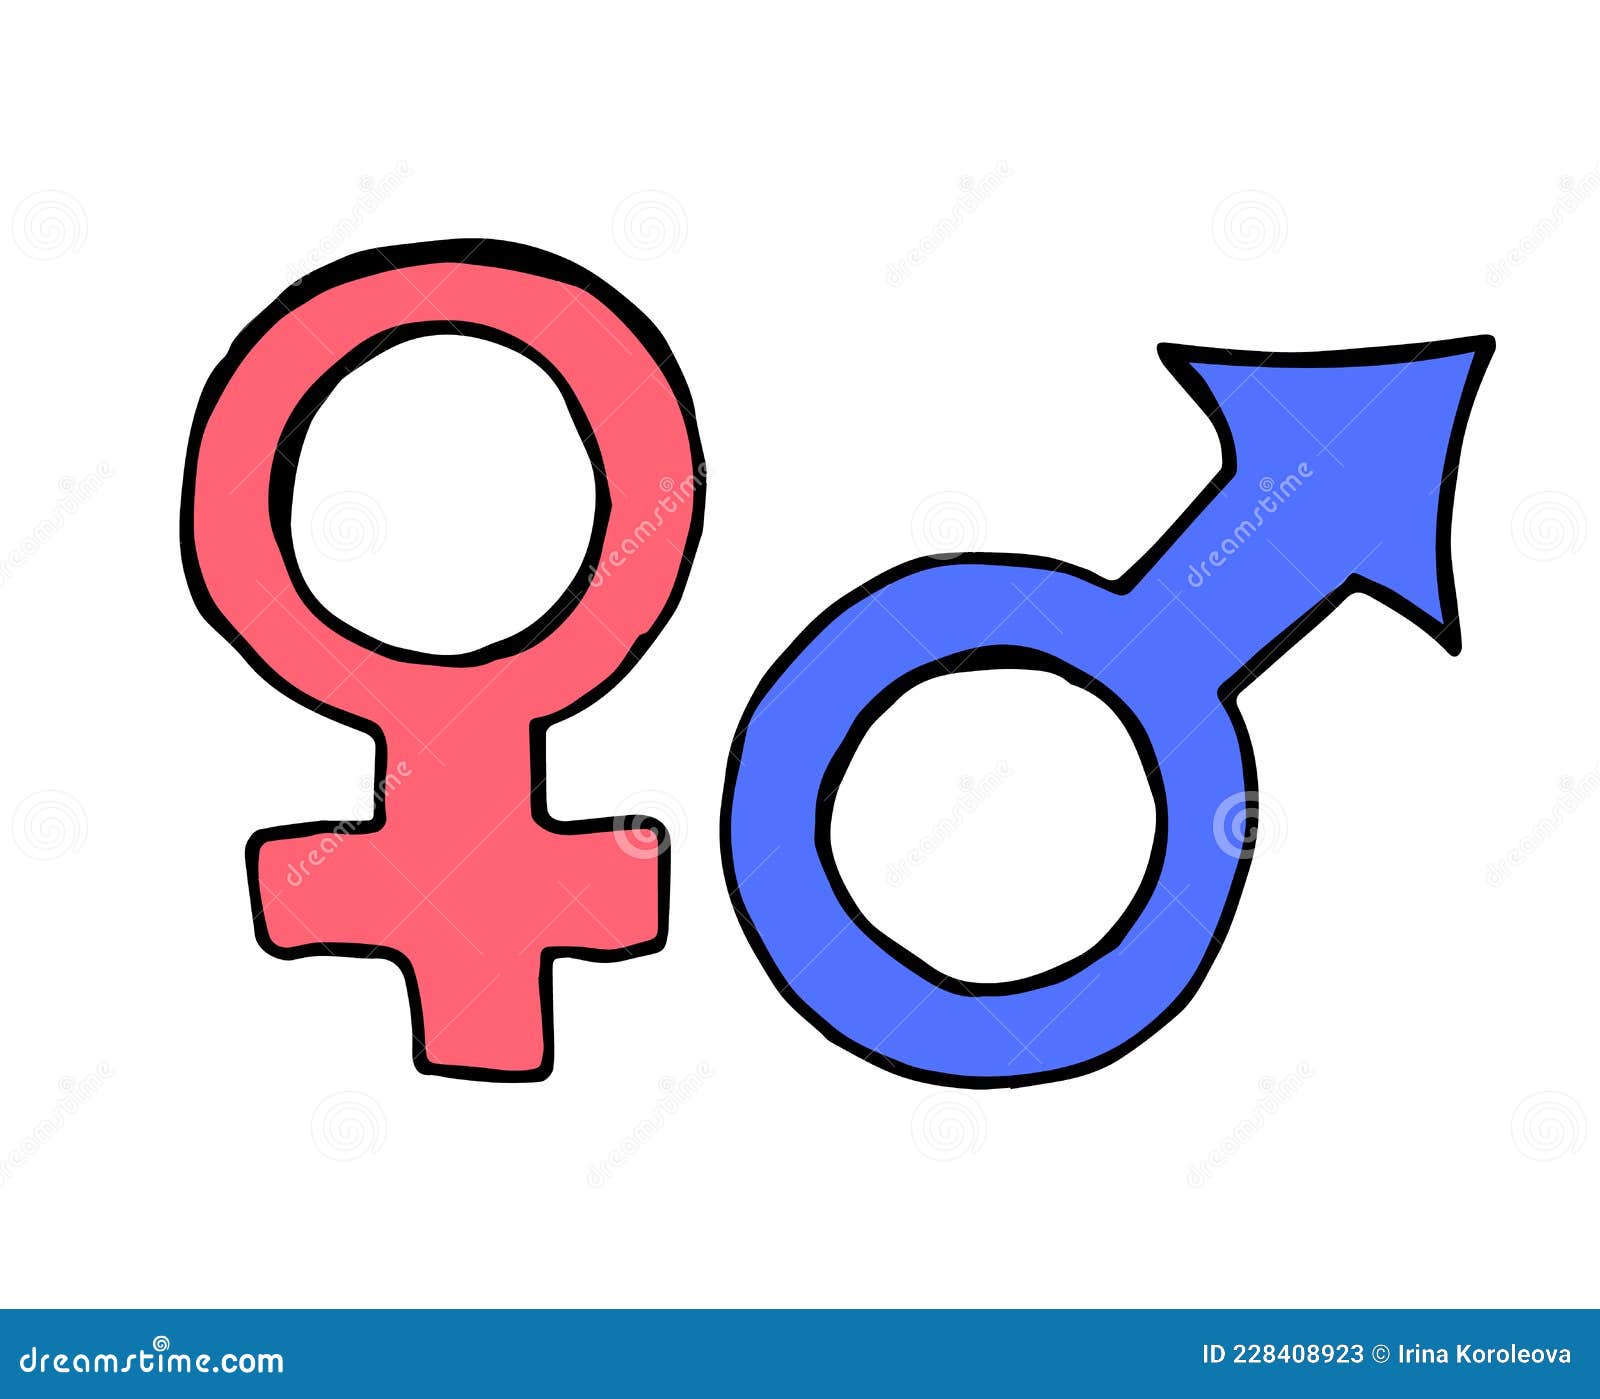 Premium Vector | Vector illustration hand drawn sketch of gender symbols  with scribble gender pictograms